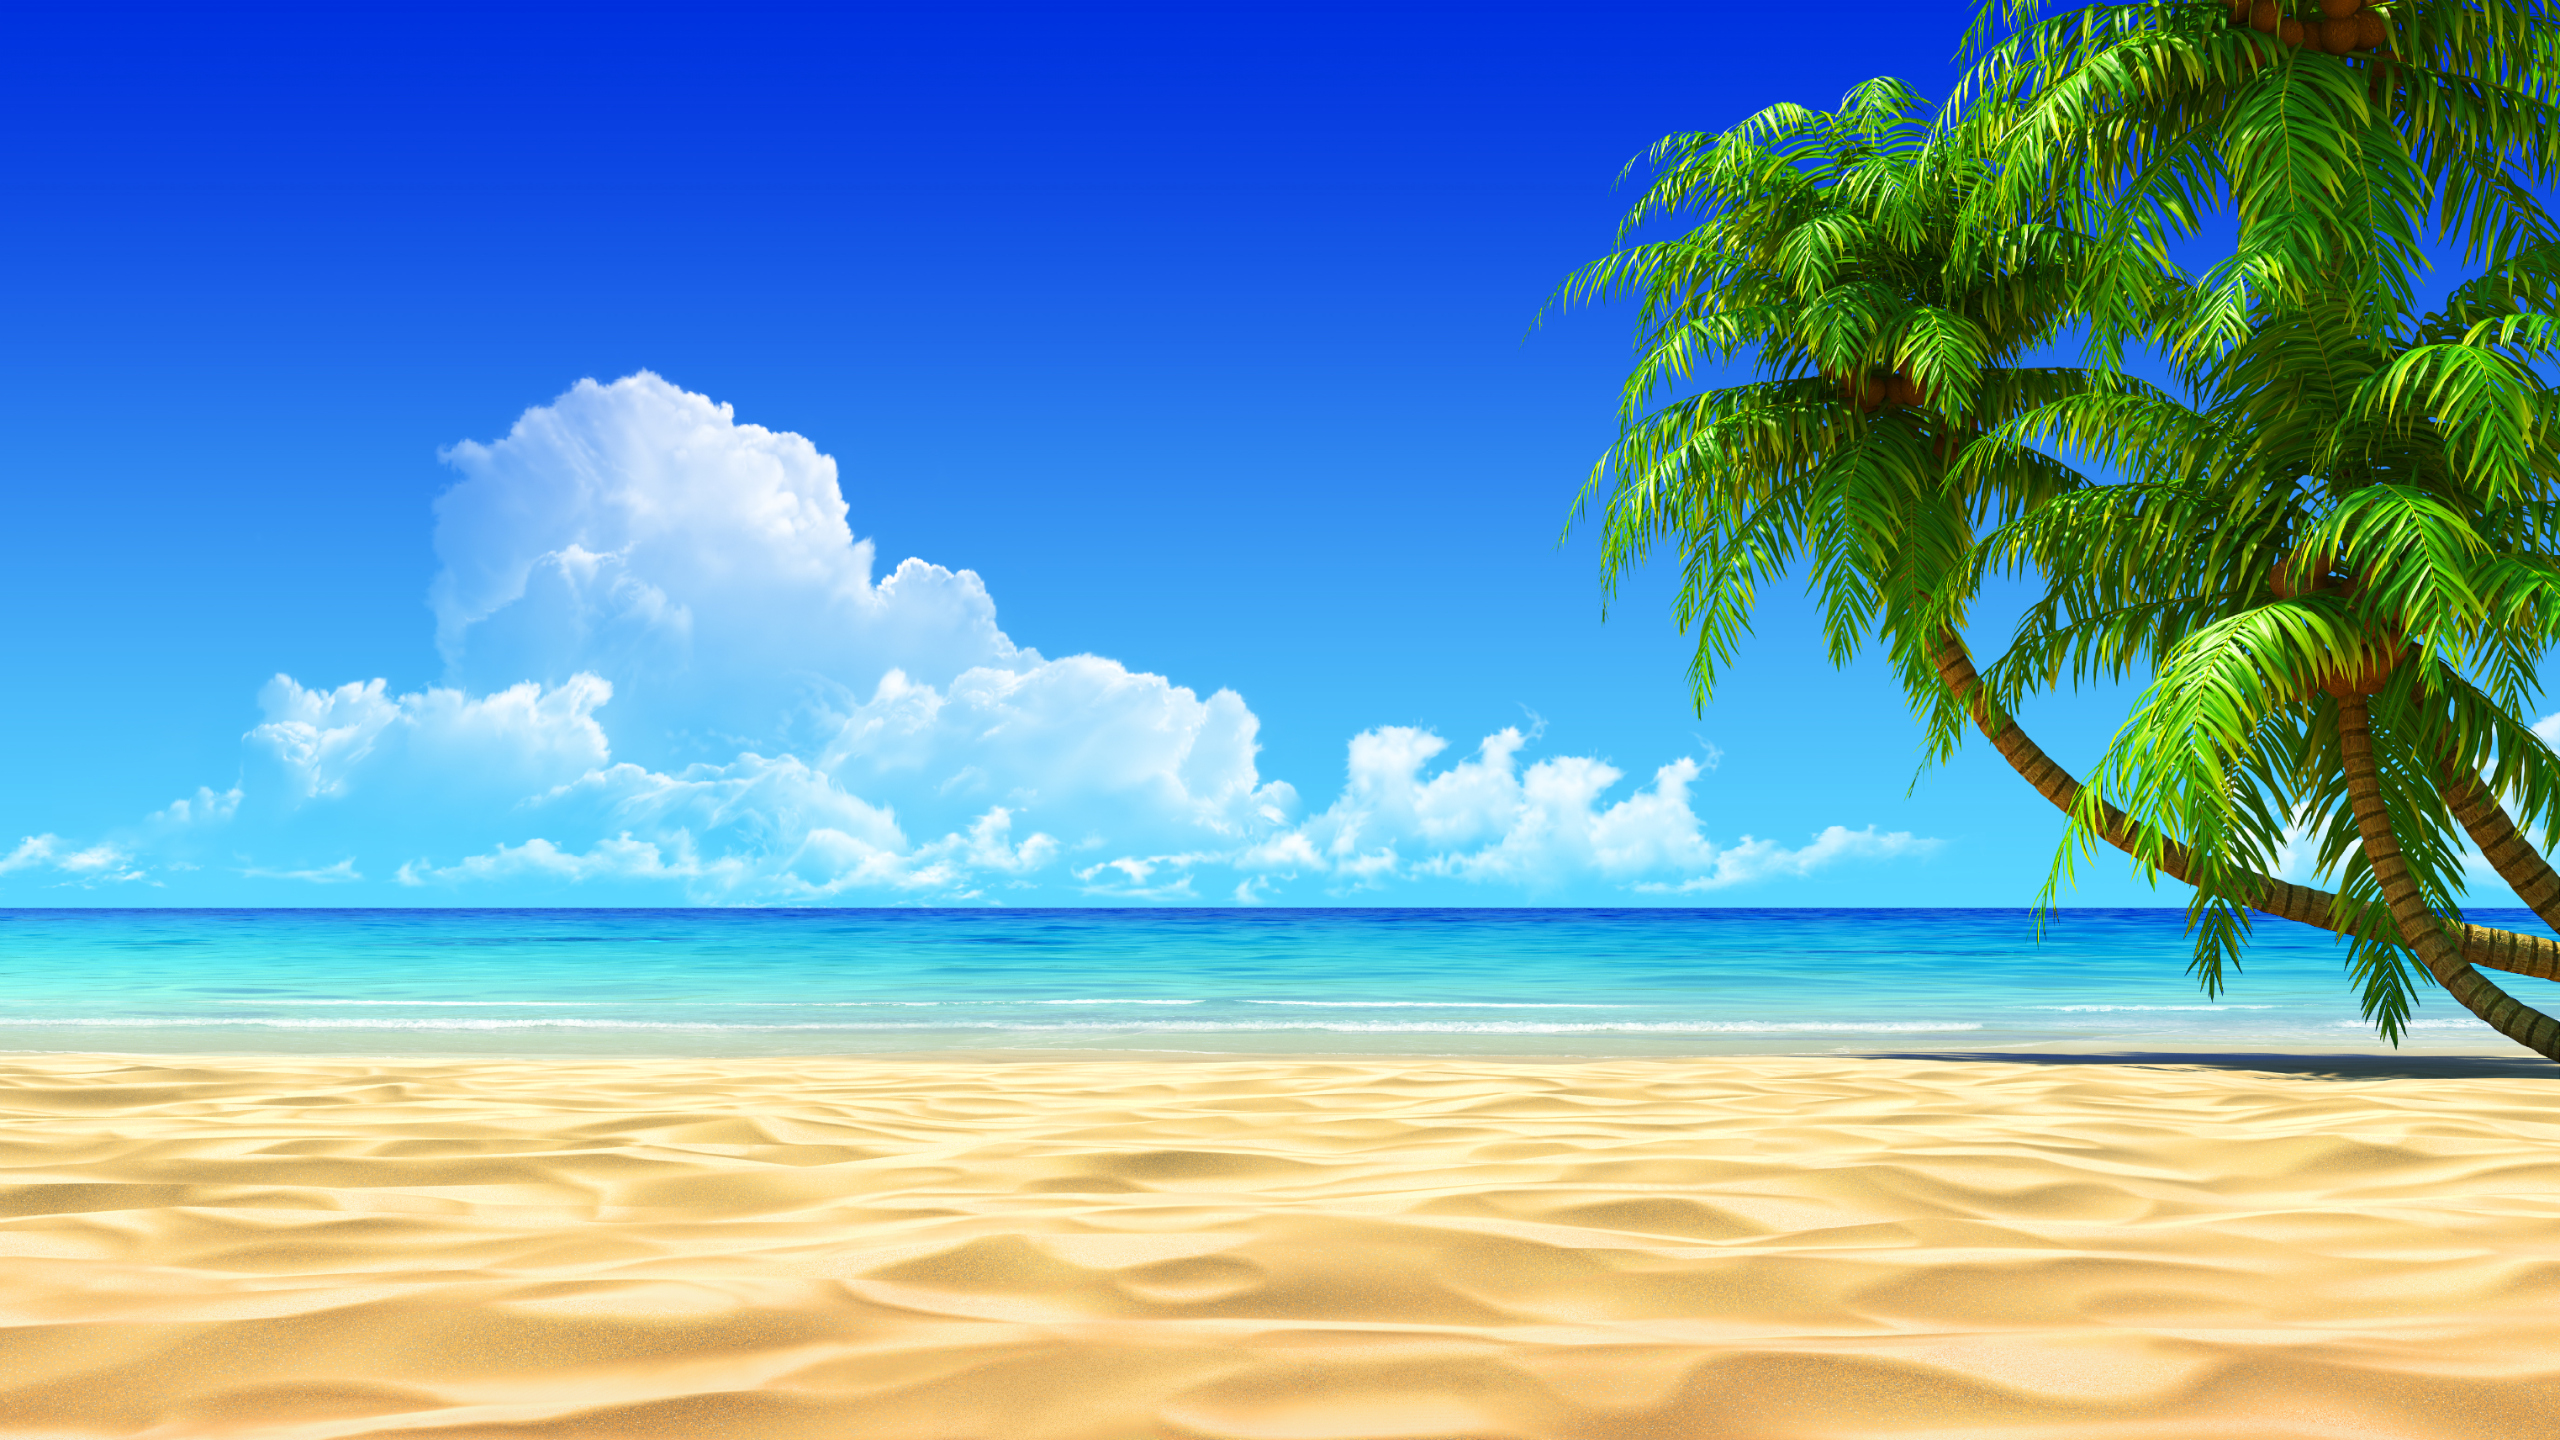 Beach Background Wallpaper 2560x1440 59893